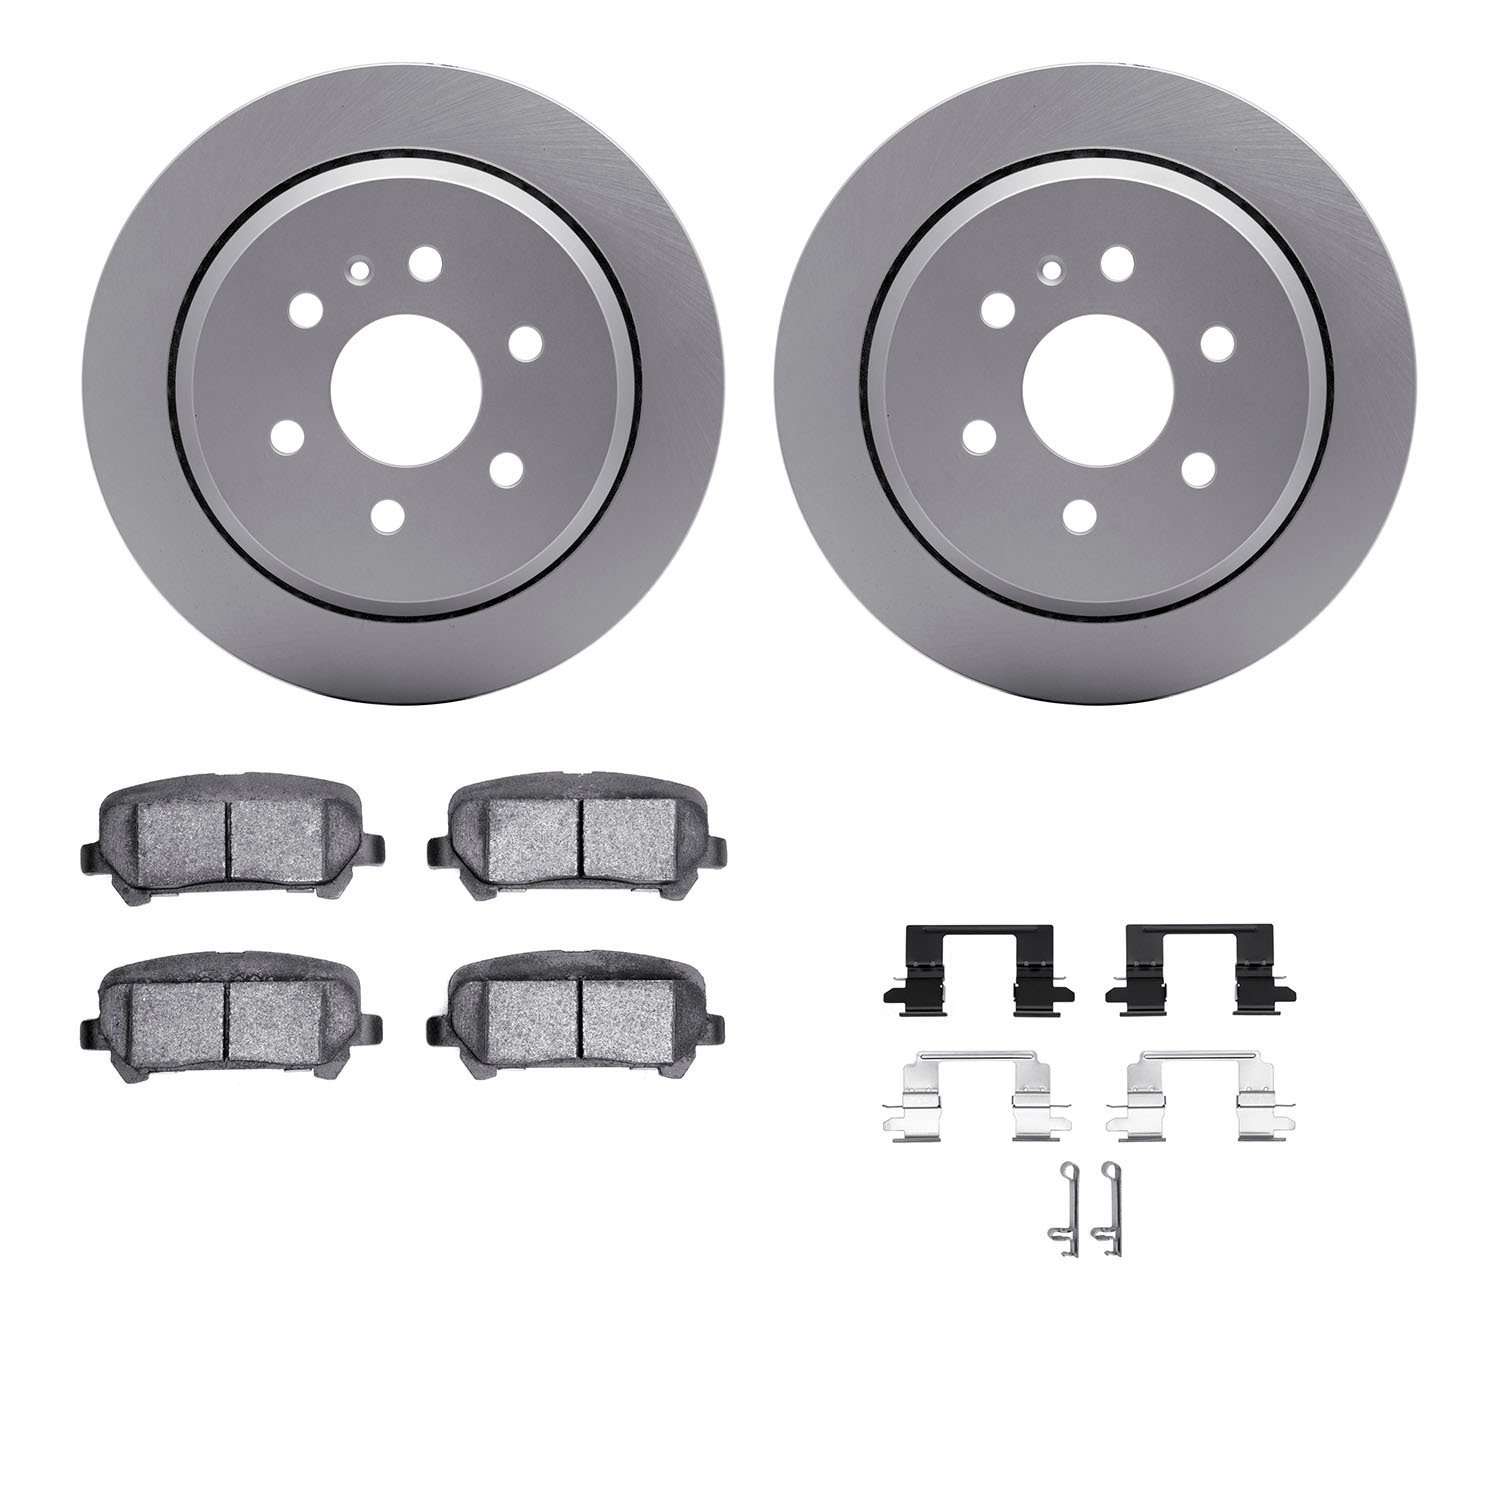 4412-48035 Geospec Brake Rotors with Ultimate-Duty Brake Pads & Hardware, 2015-2020 GM, Position: Rear